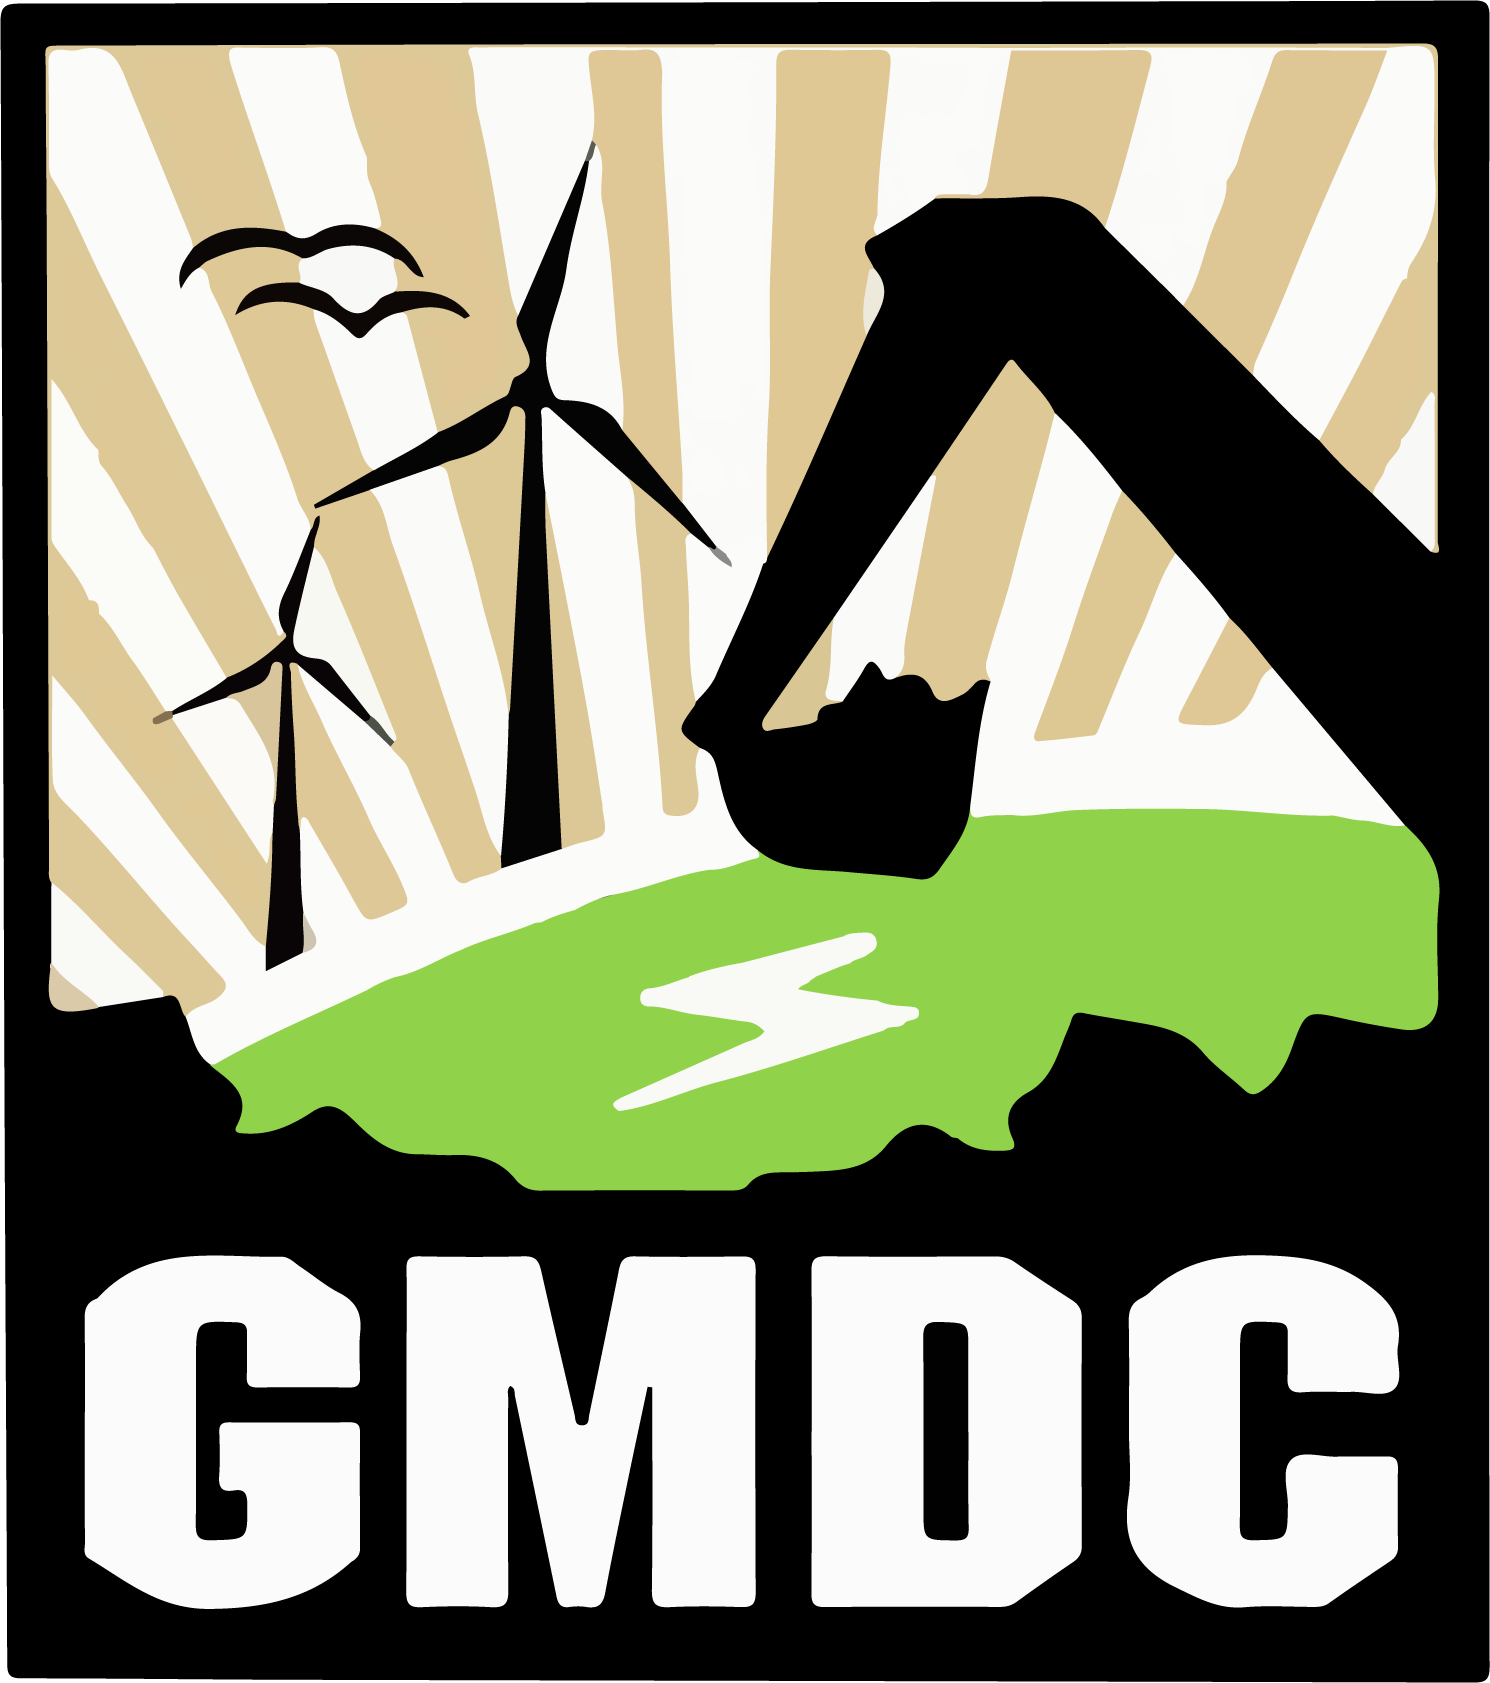 Gujarat Mineral Development logo (transparent PNG)